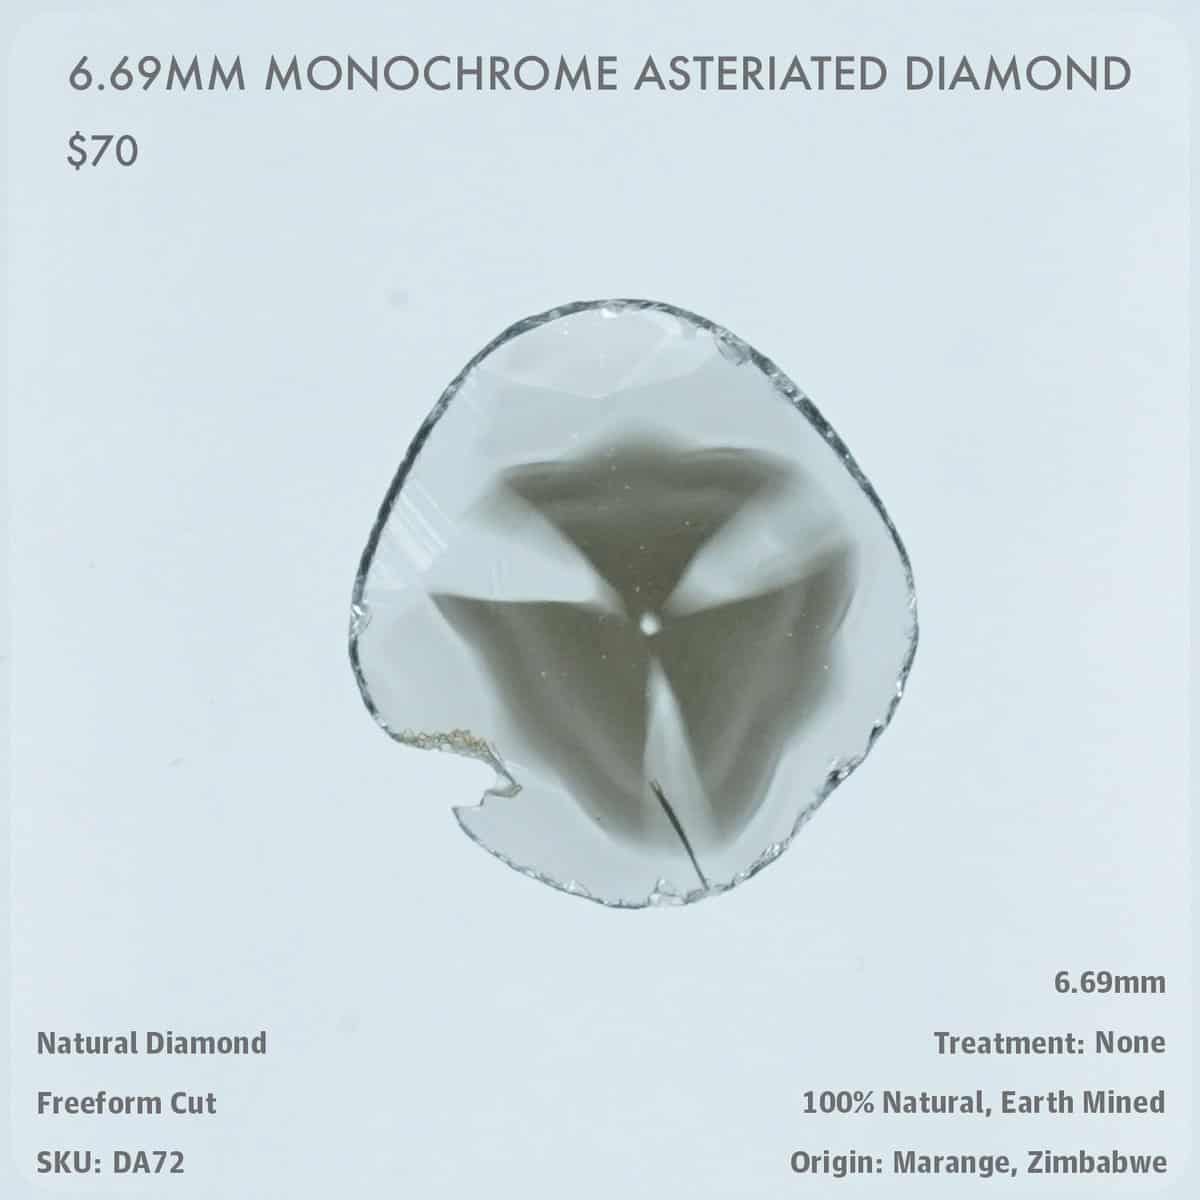 6.69mm Monochrome Asteriated Diamond